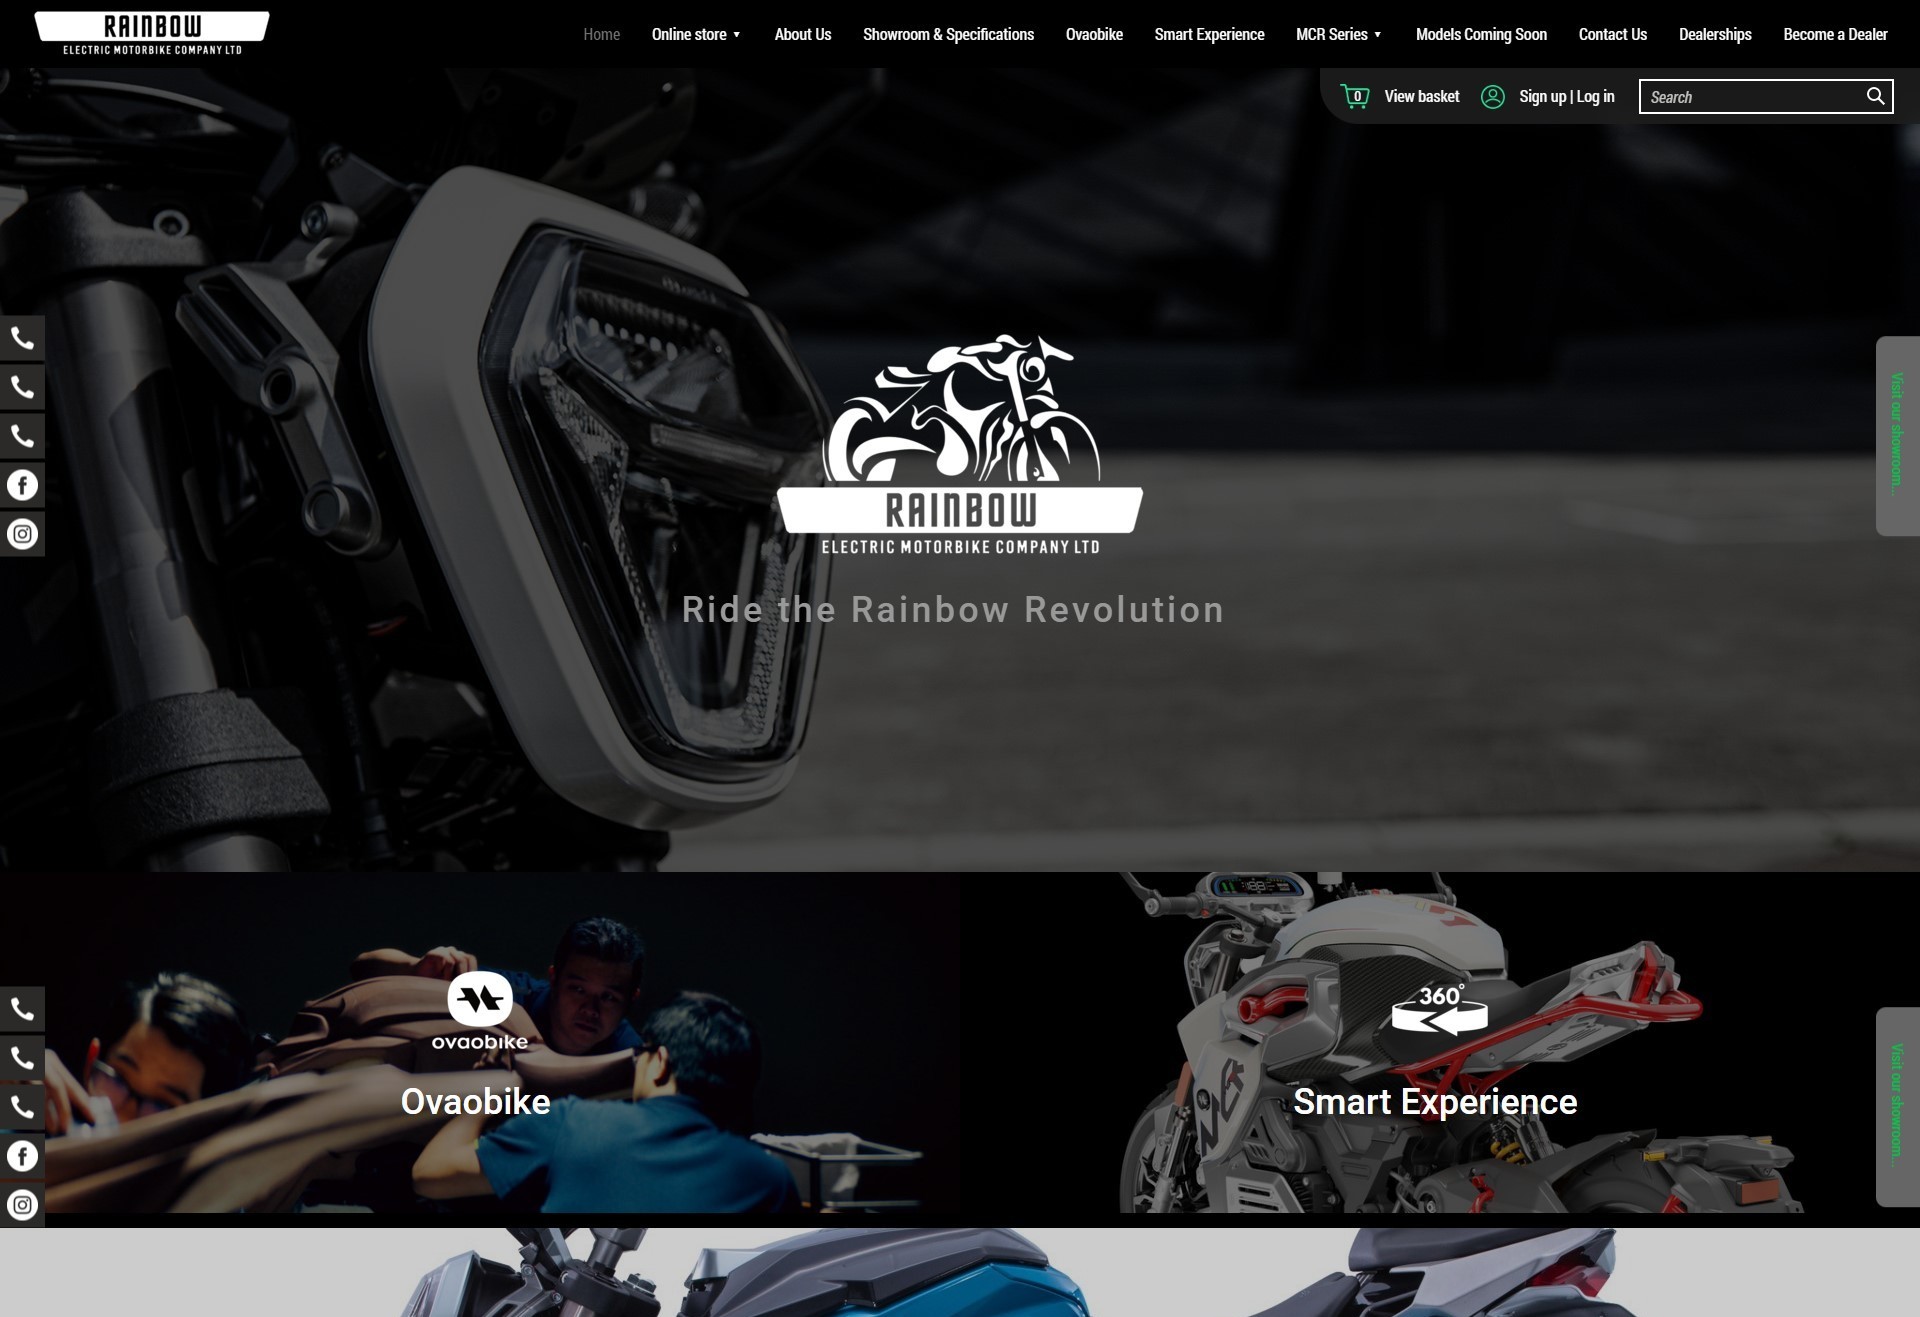 A responsive, sleek web design for a motorbike company shown on desktop.